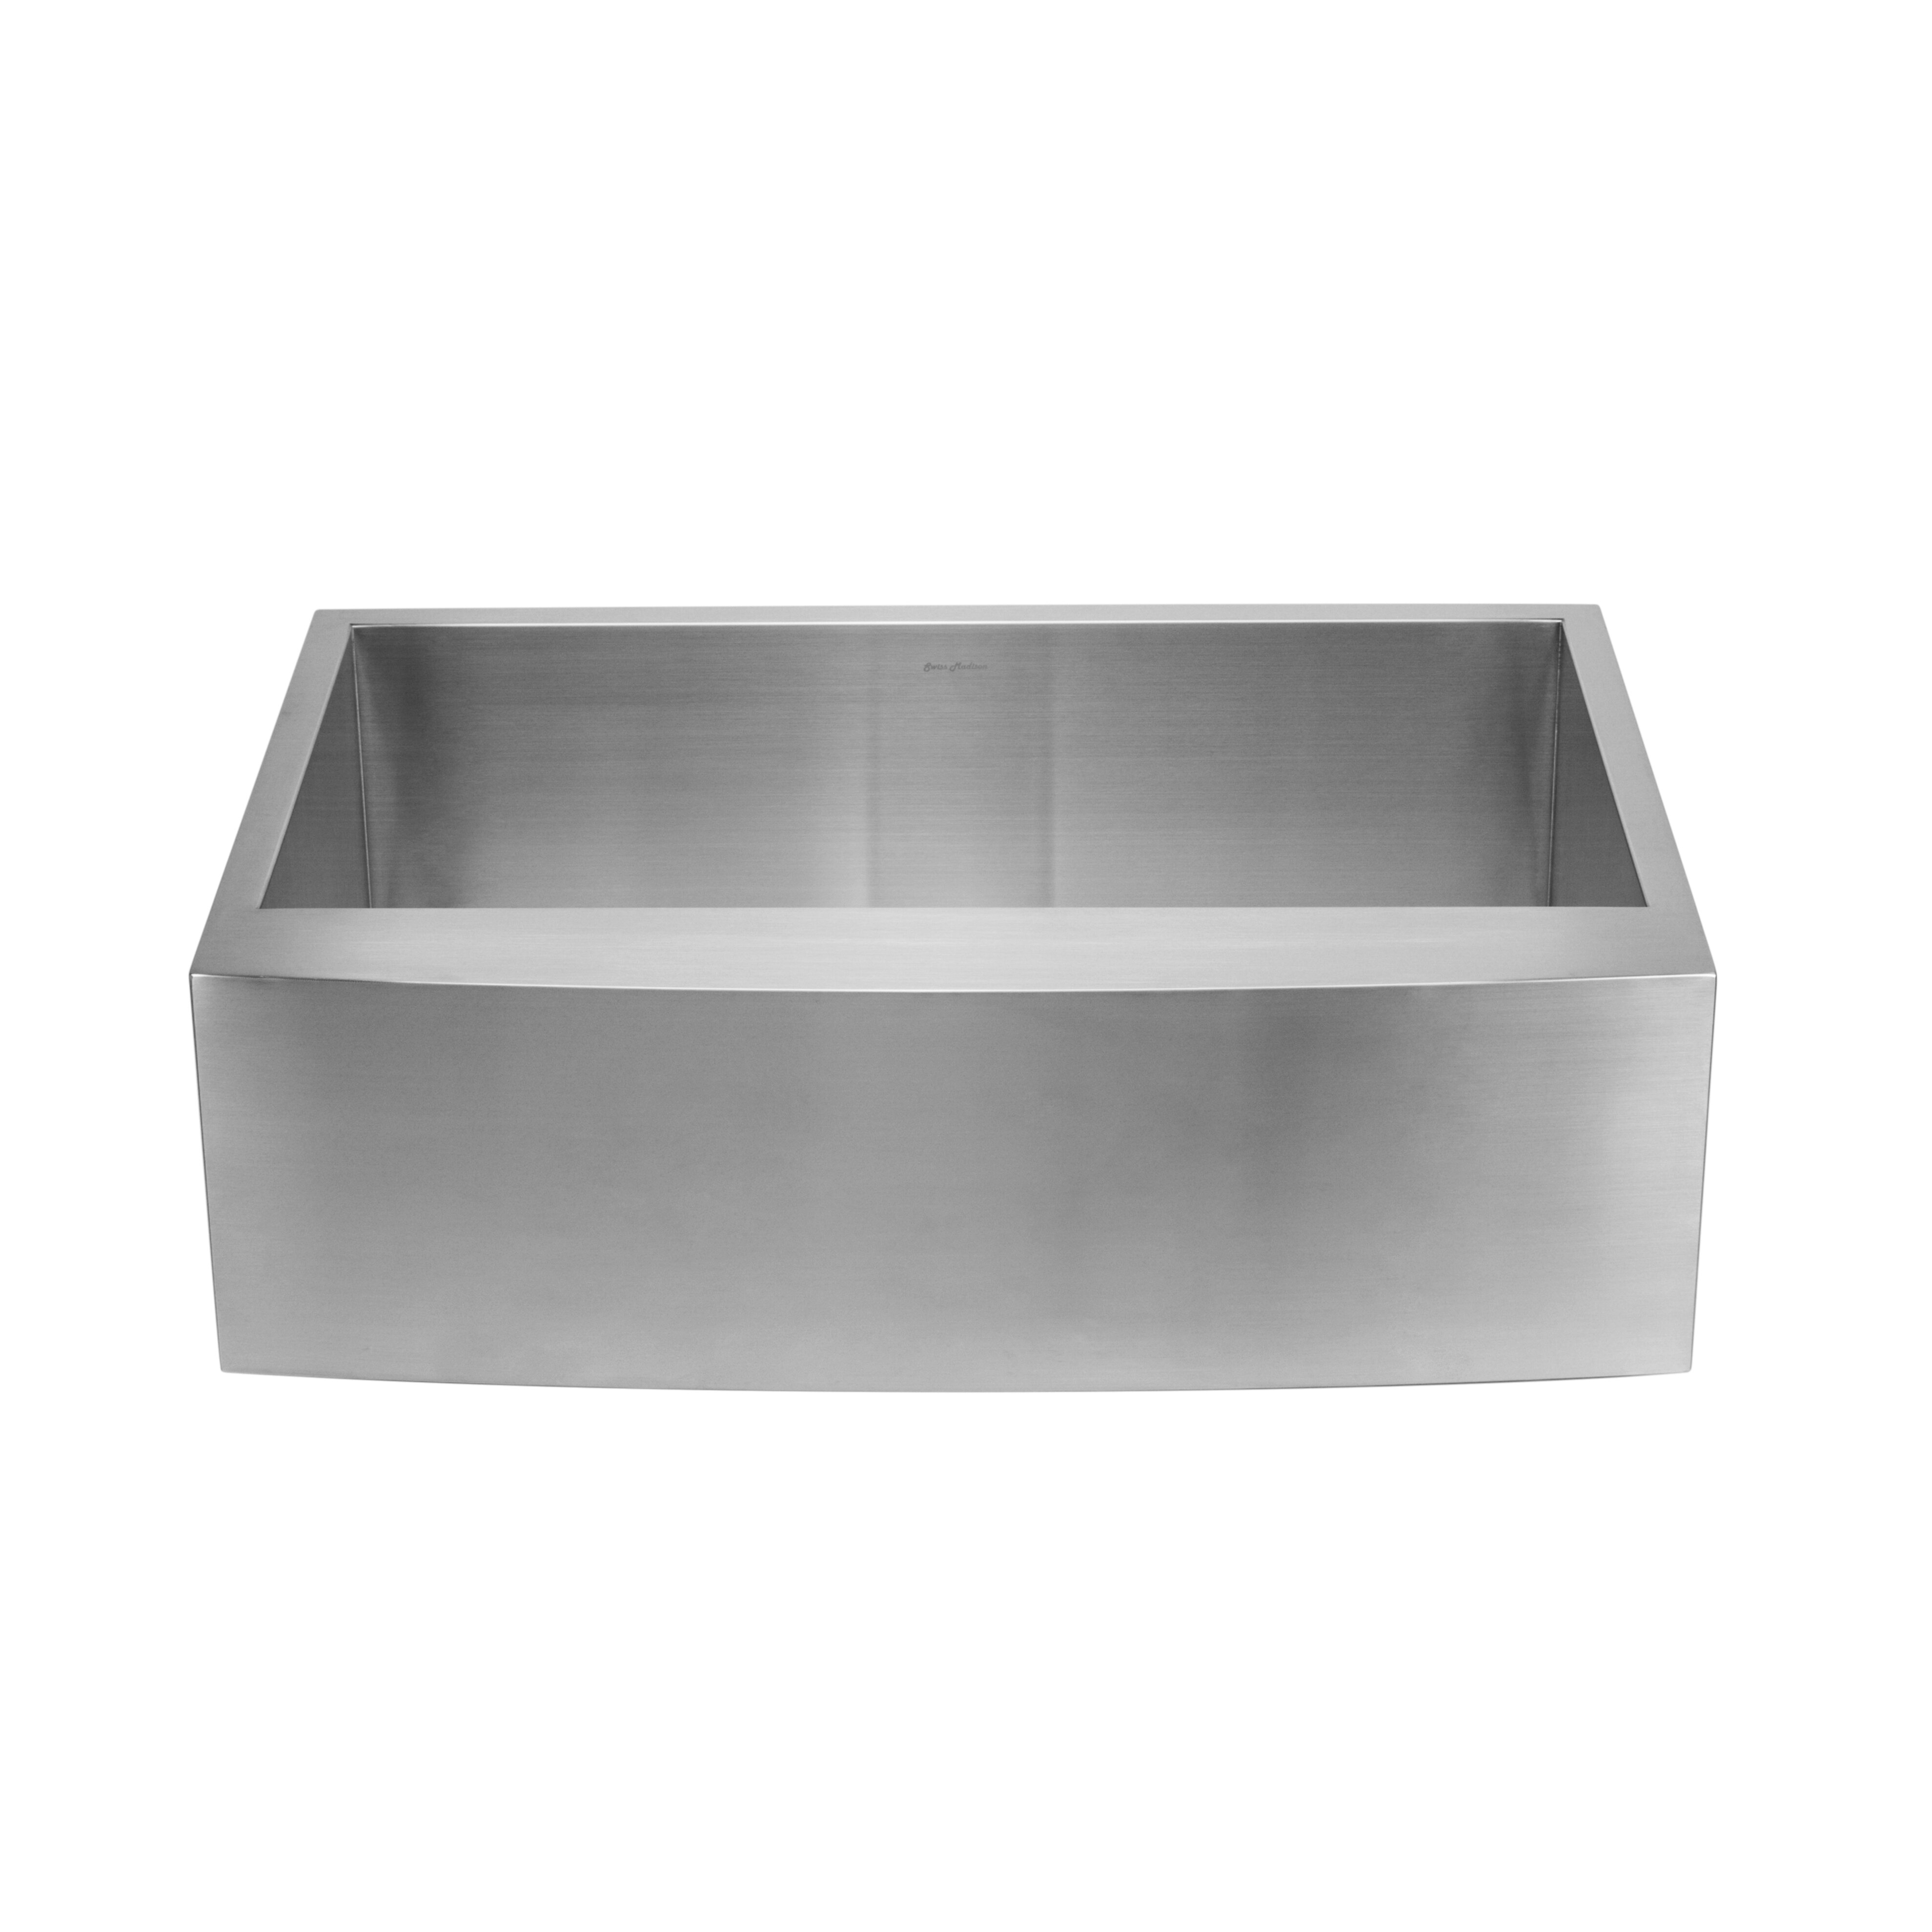 Escurreplatos plegable SinkSide, Small - Mid Grey